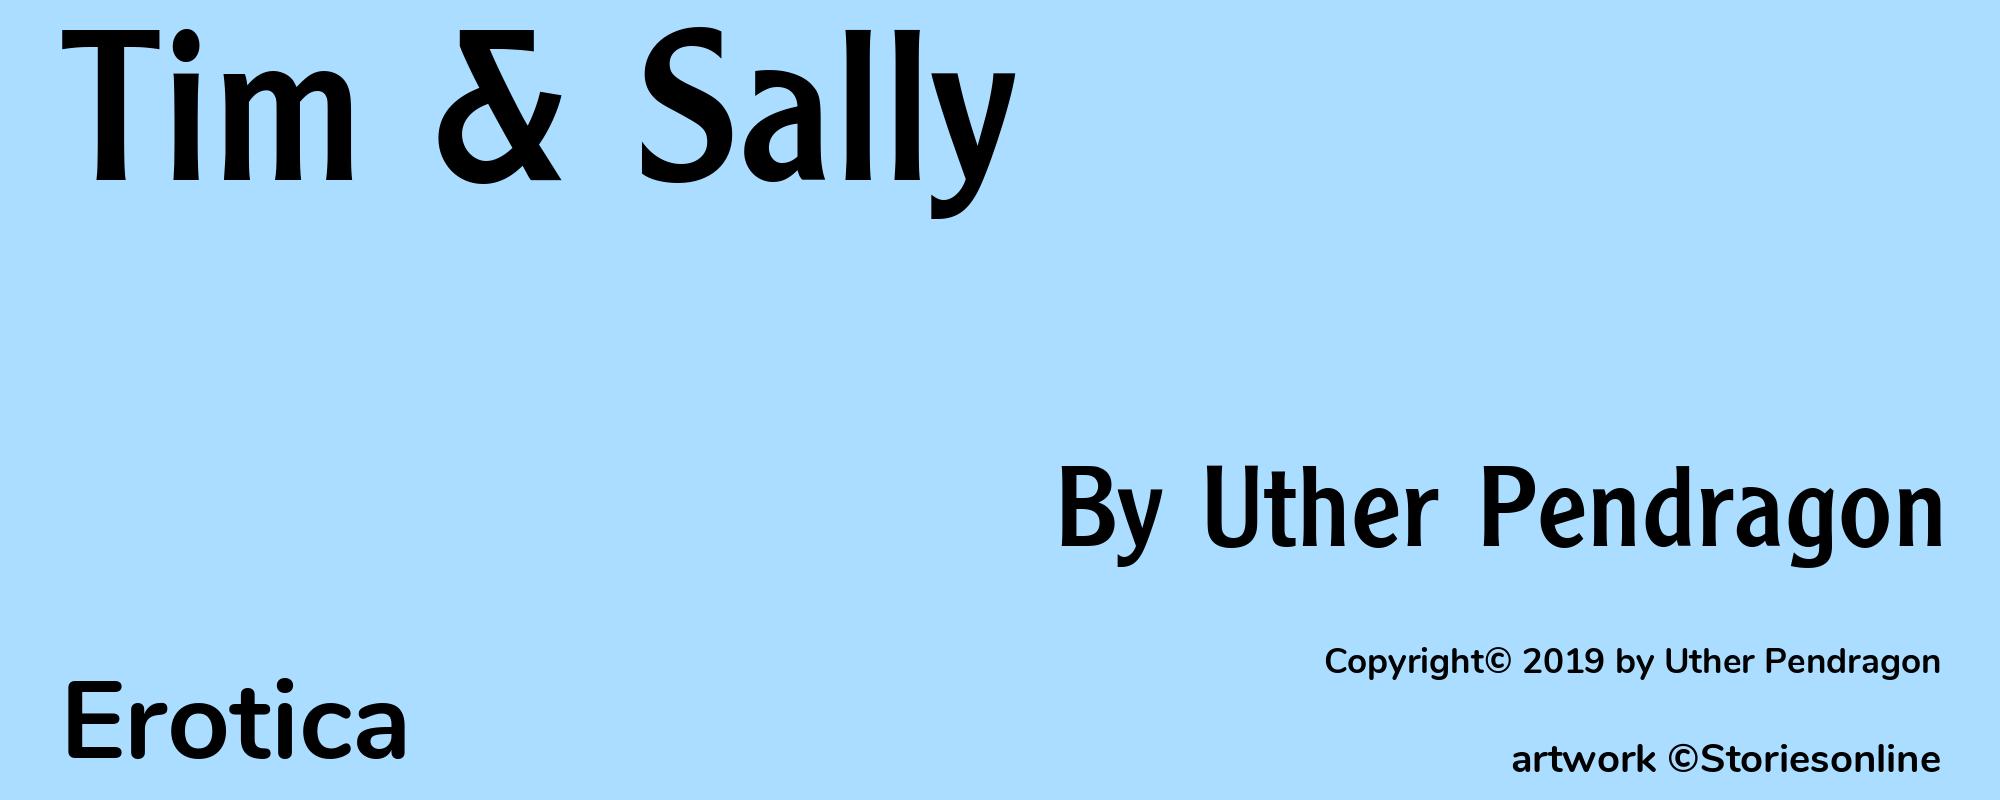 Tim & Sally - Cover